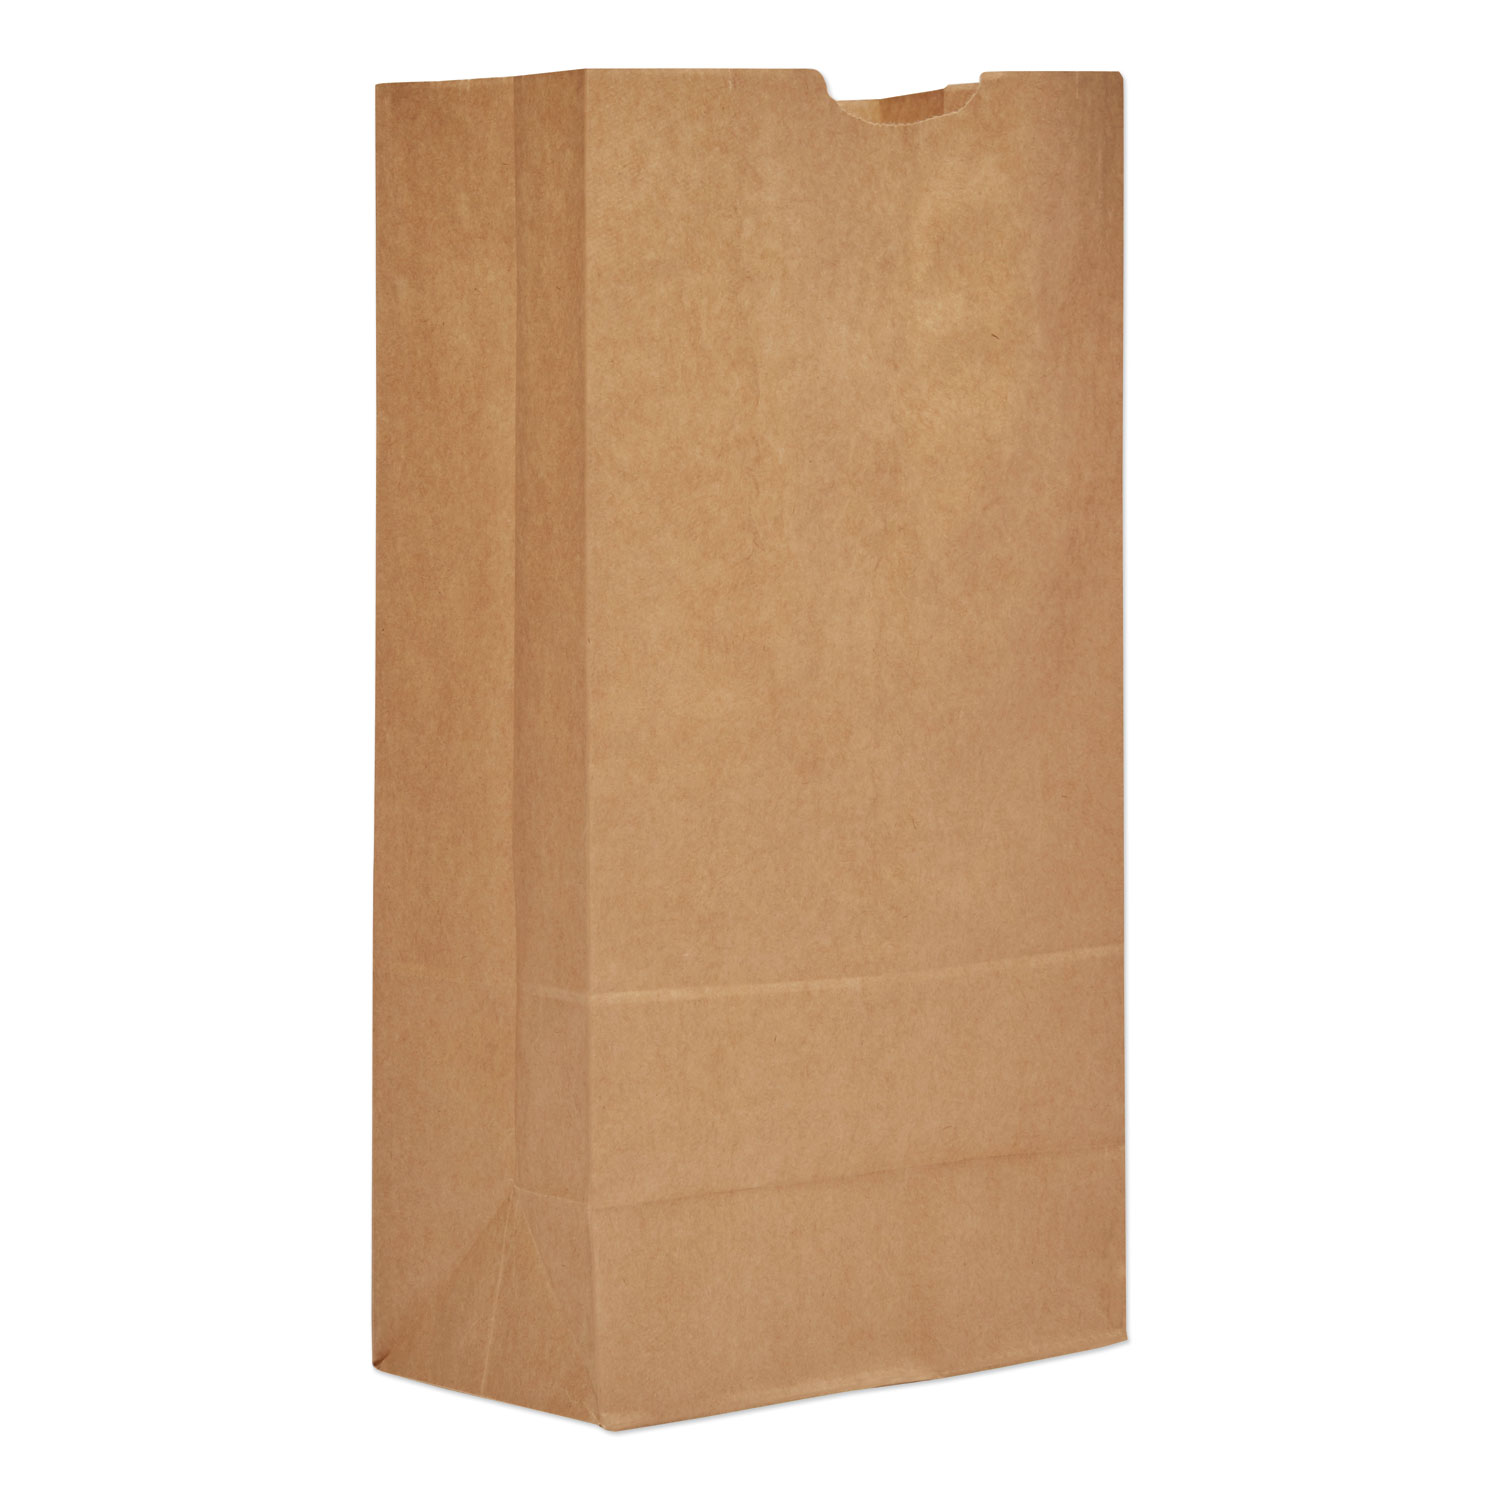  General 18420 Grocery Paper Bags, 20 lbs Capacity, #20, 8.25w x 5.94d x 16.13h, Kraft, 500 Bags (BAGGK20500) 